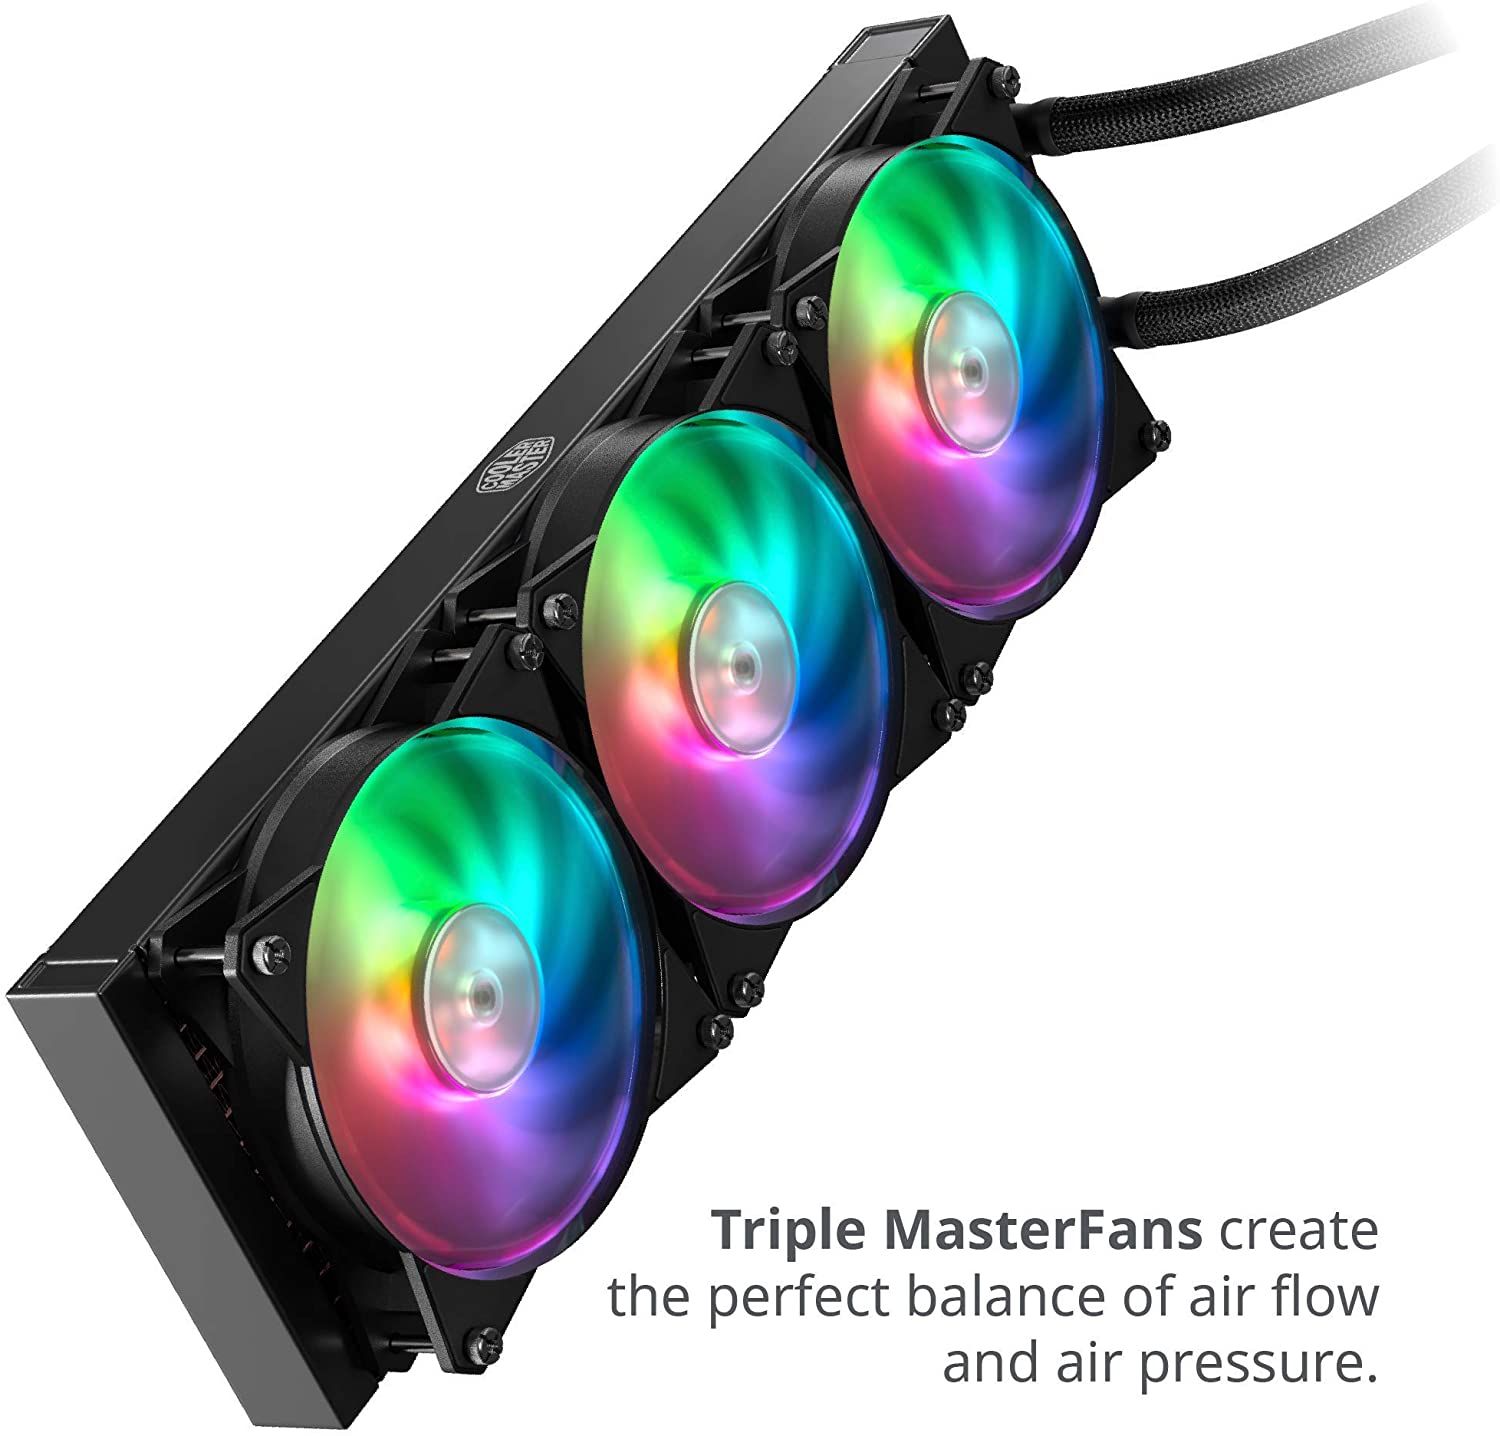 Cooler Master MasterLiquid ML360R triple fans